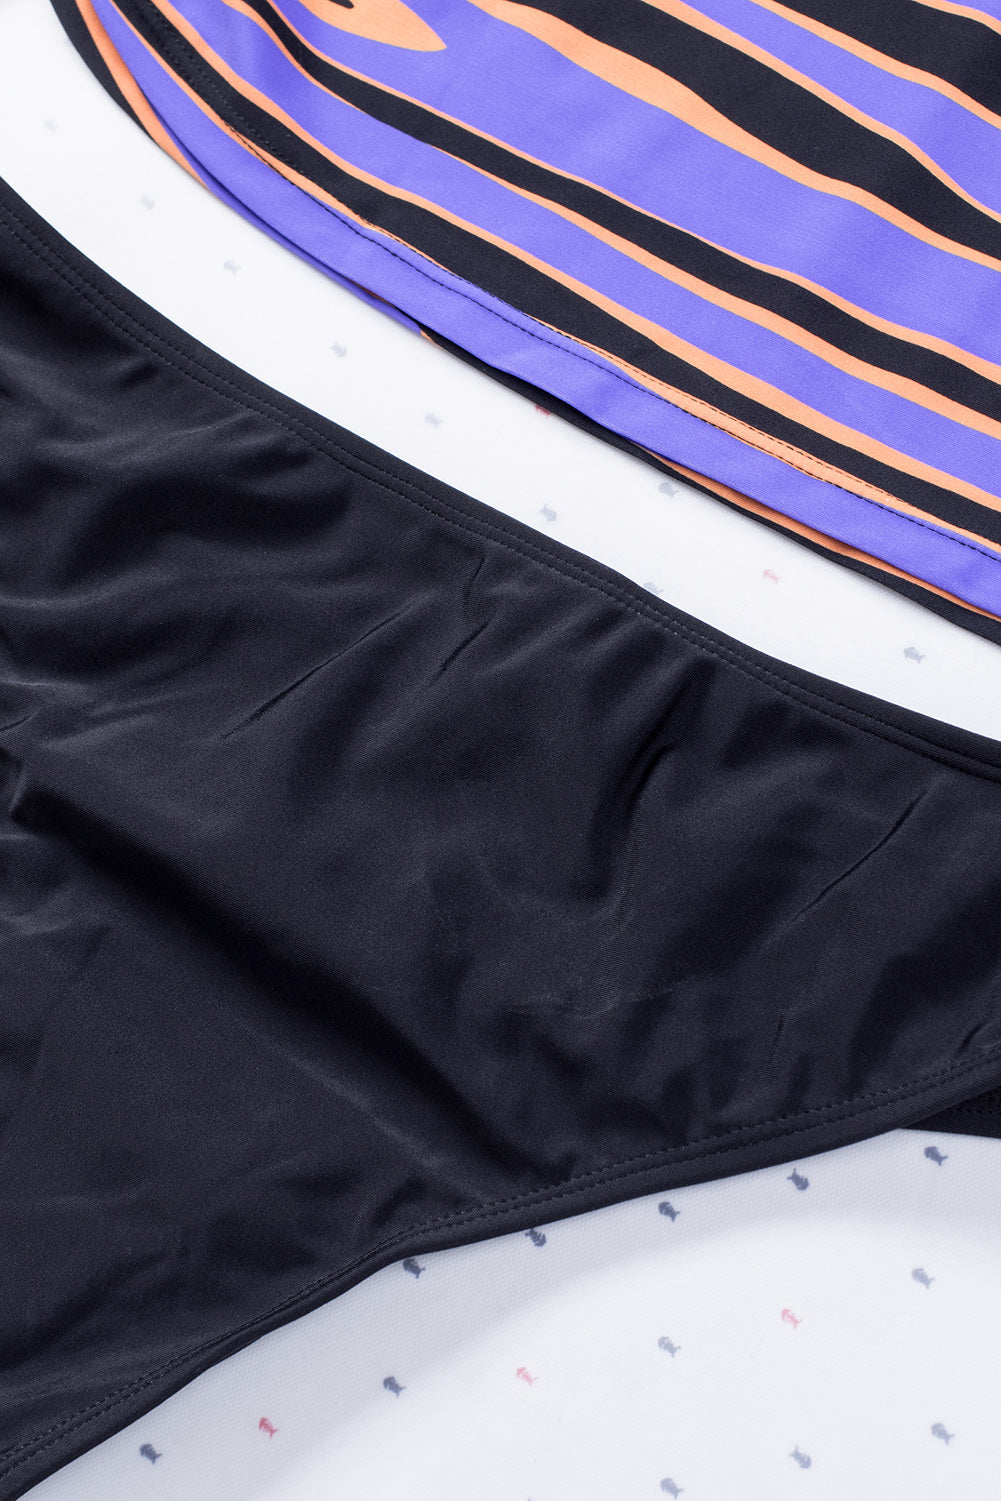 Purple Animal Stripes Lacing Tankini Swimsuit Tankinis JT's Designer Fashion